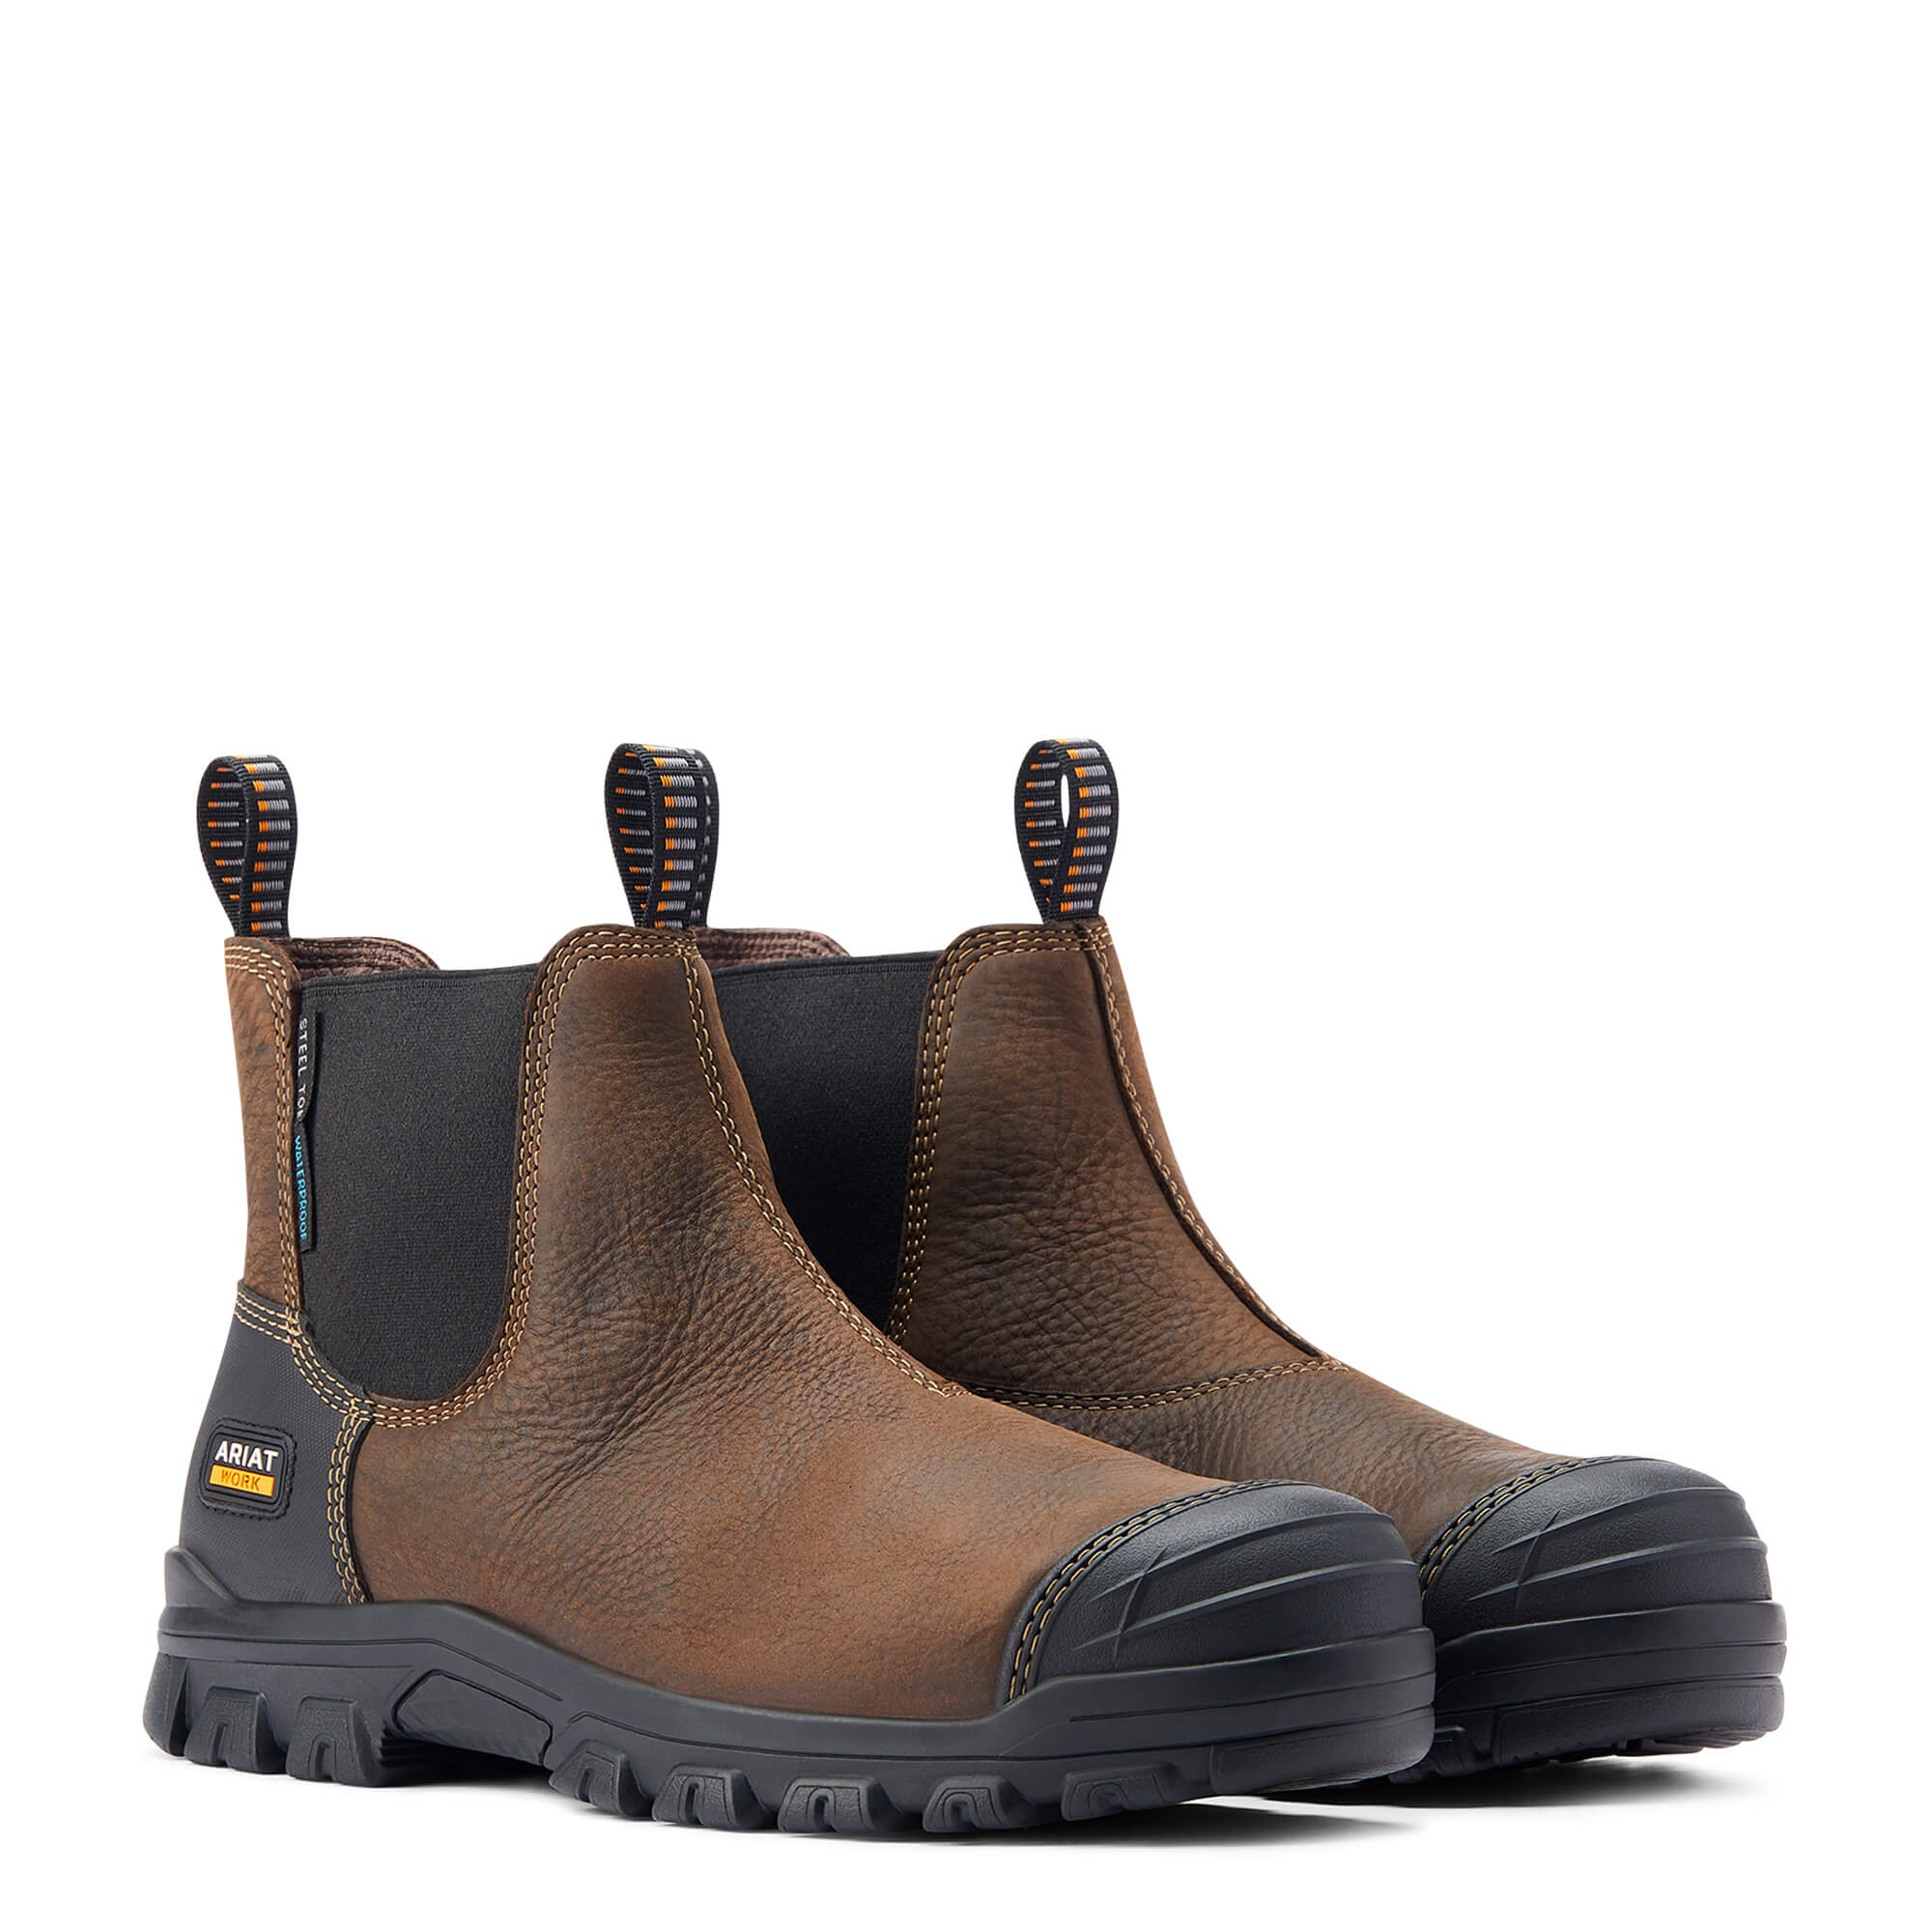 Stiefeltte MNS Treadfast Chelsea Waterproof  Steel Toe Work Boot dark brown | 10044475